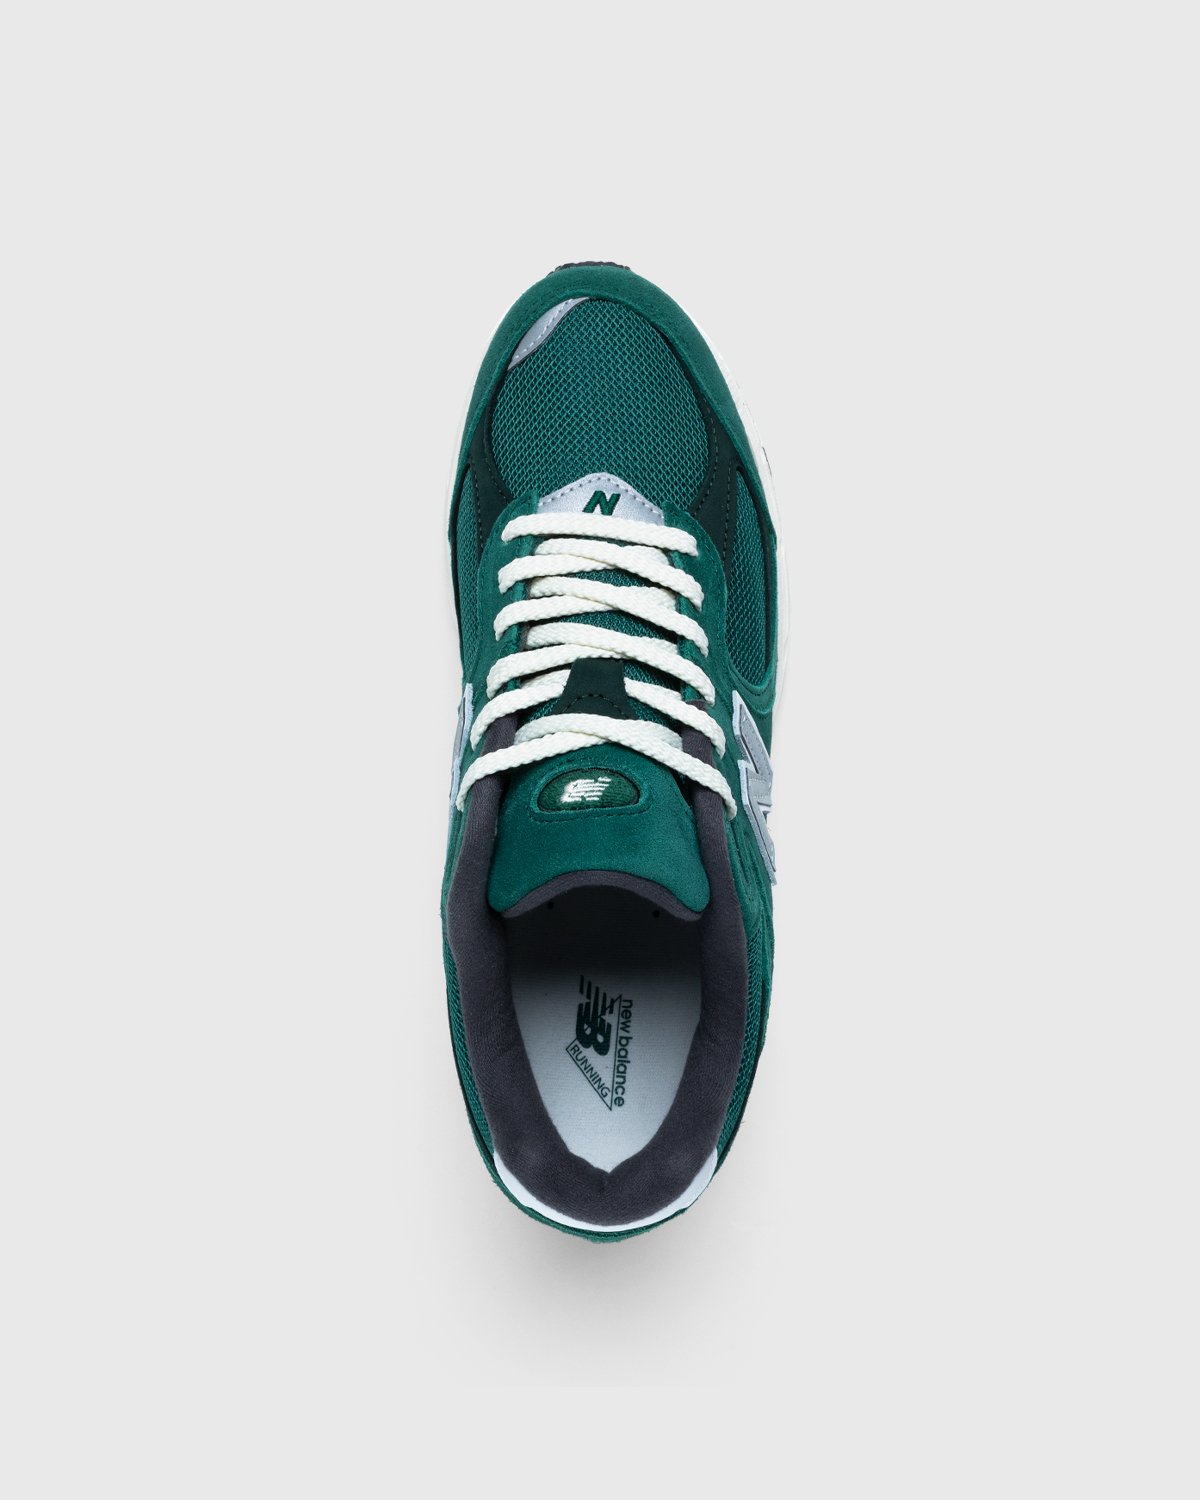 New Balance - M2002RHB Nightwatch Green/Black Emerald - Footwear - Green - Image 6